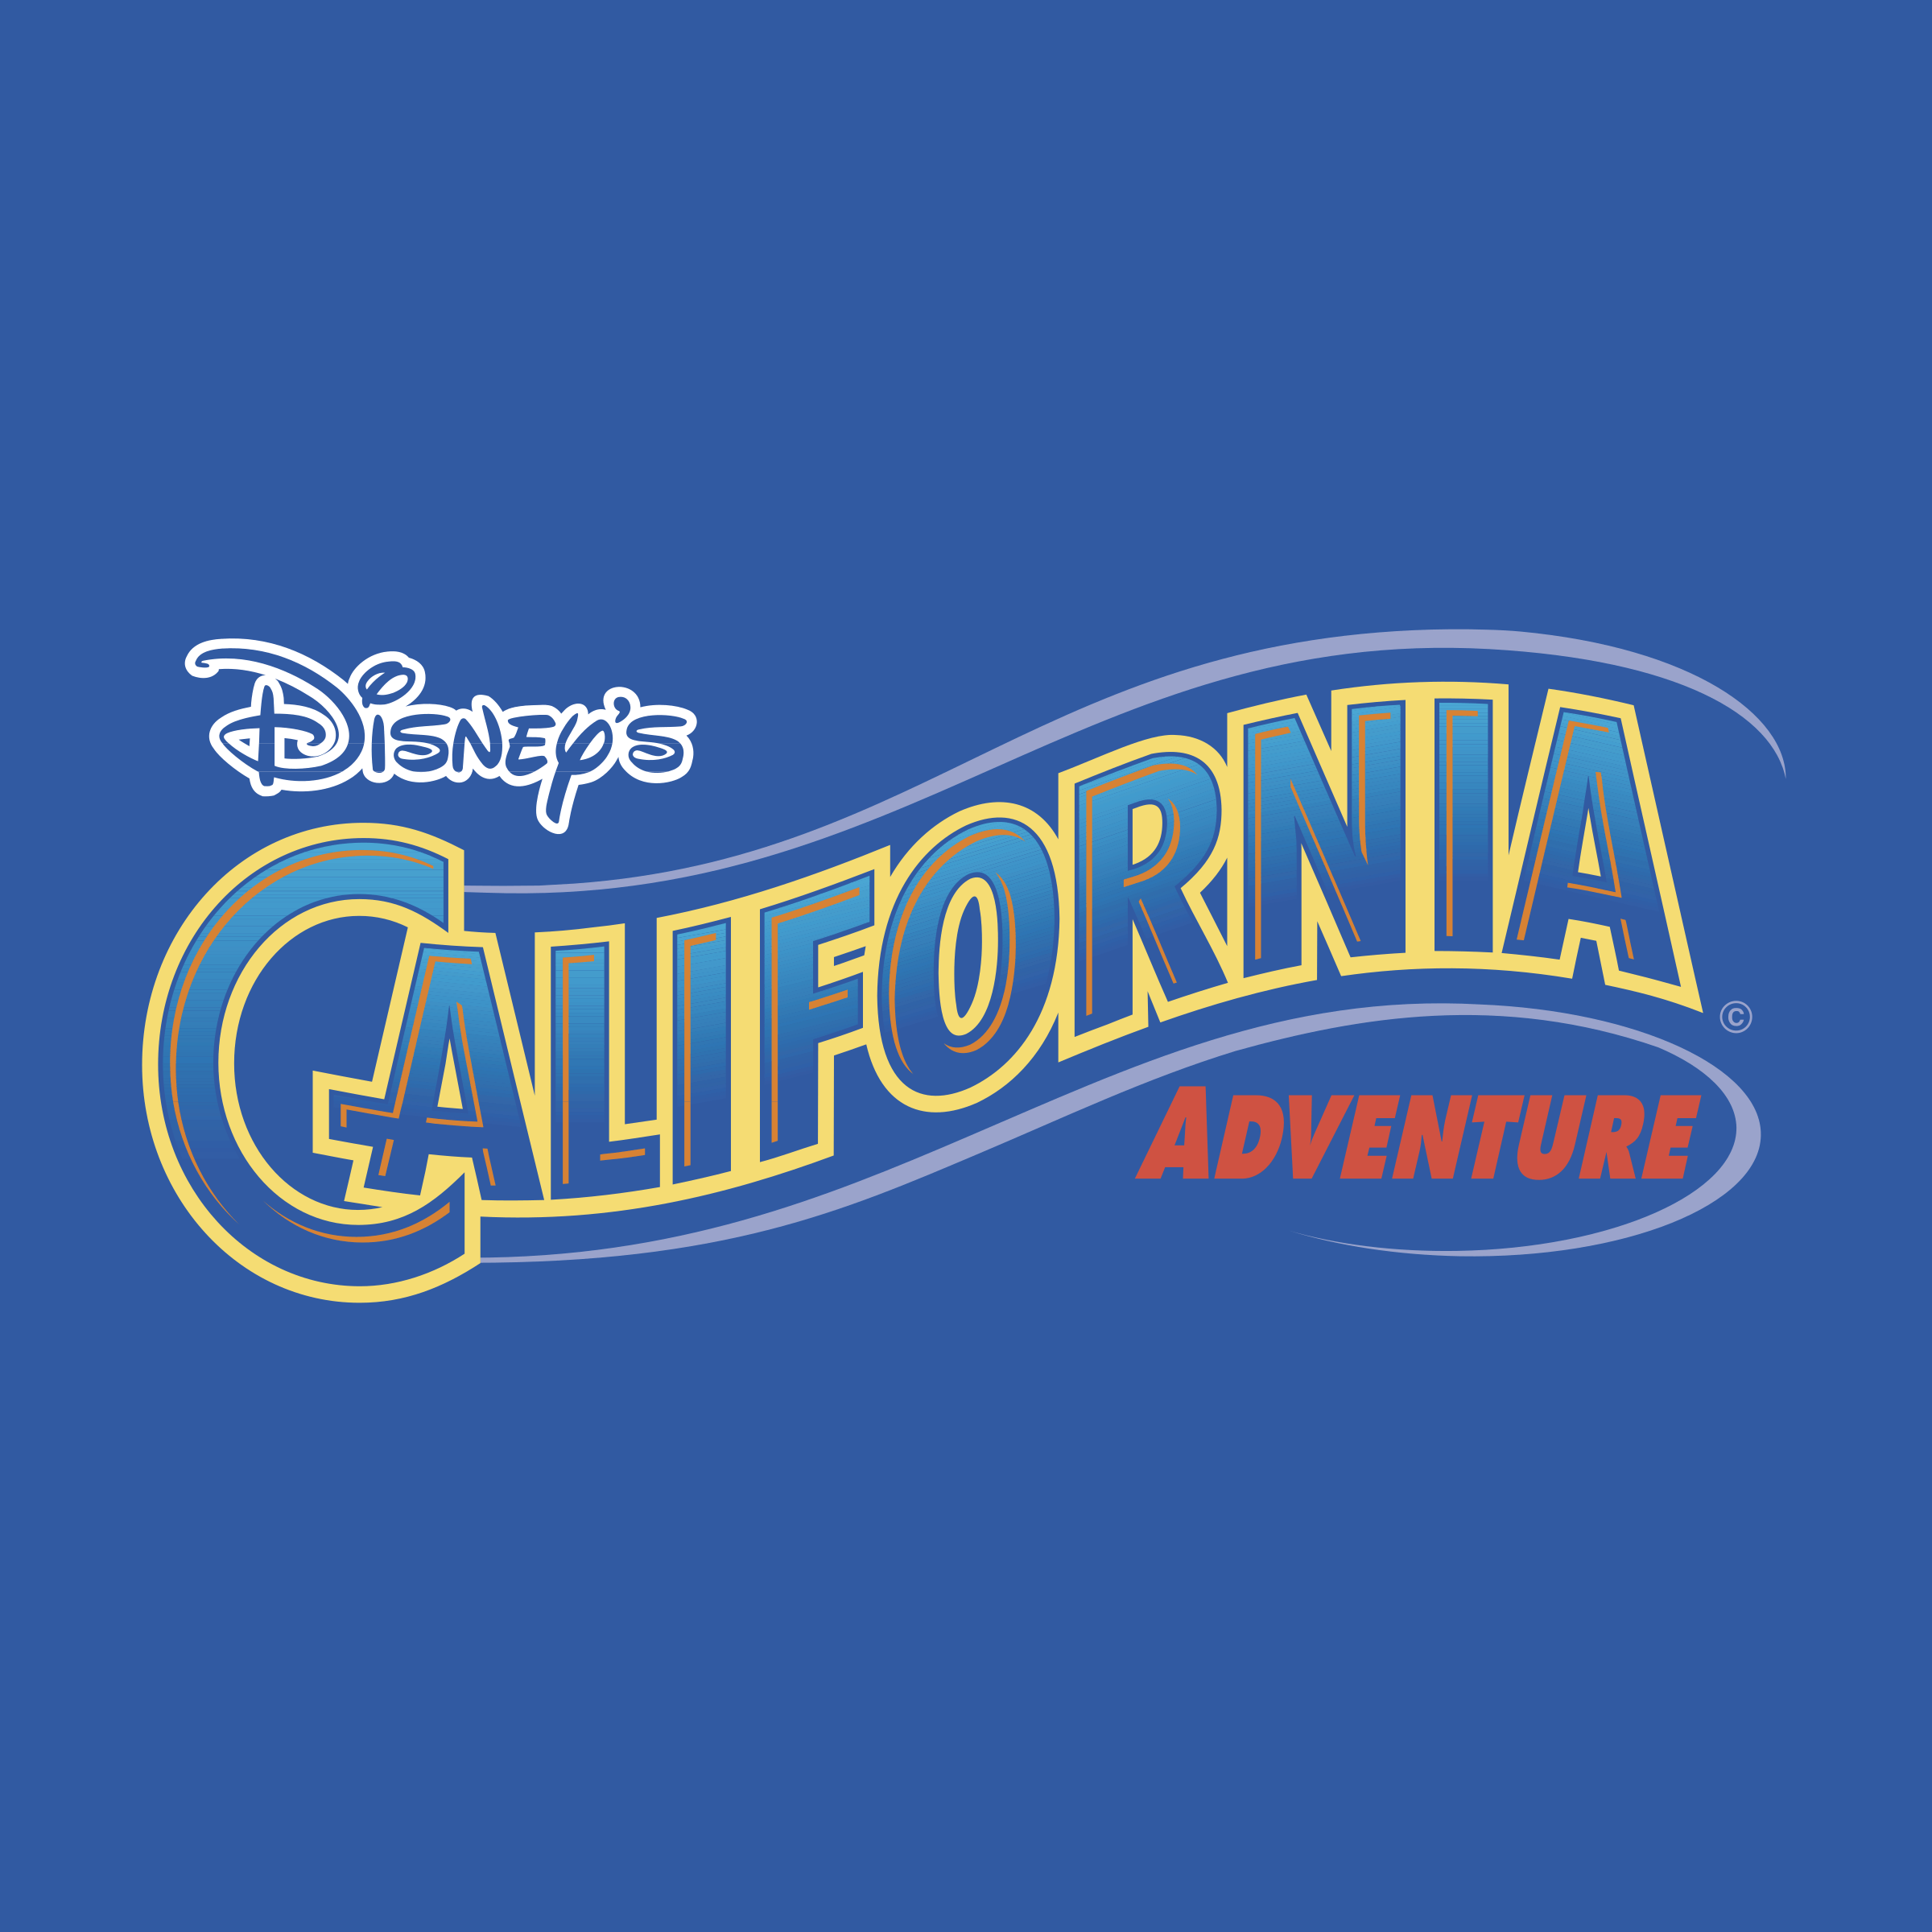 California Adventure Logo - Disney's California Adventure Logo PNG Transparent & SVG Vector ...